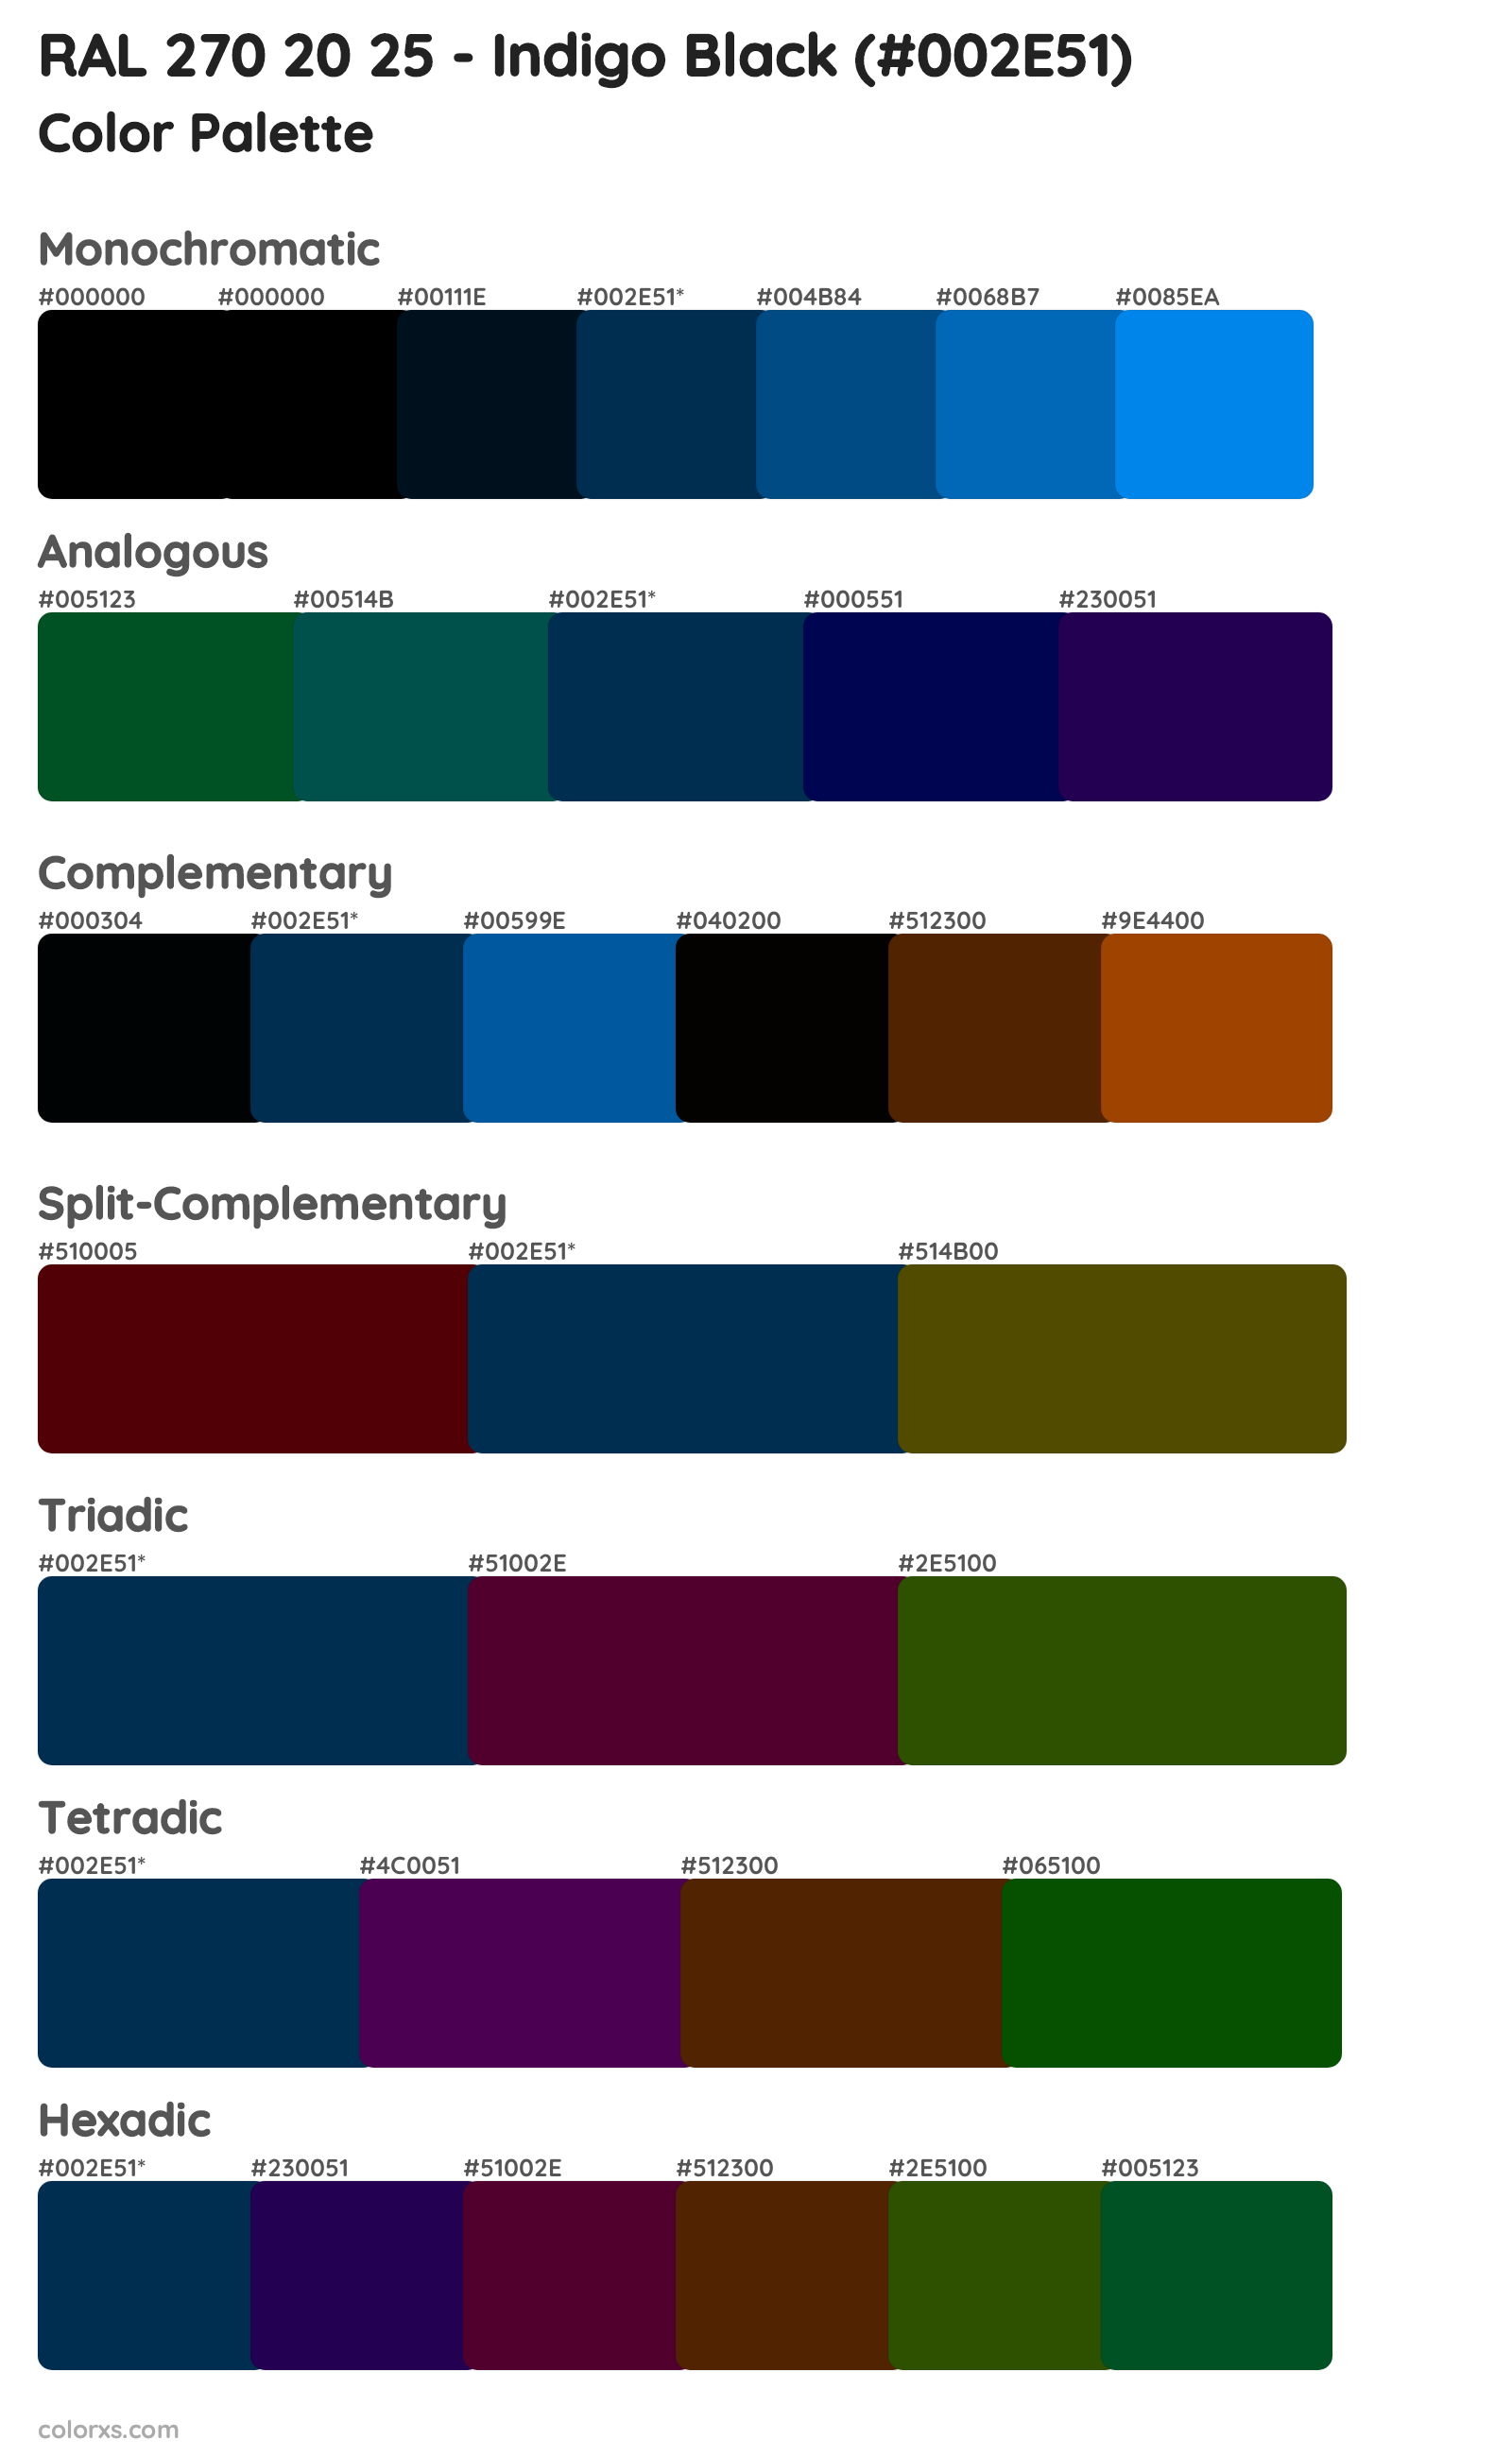 RAL 270 20 25 - Indigo Black Color Scheme Palettes